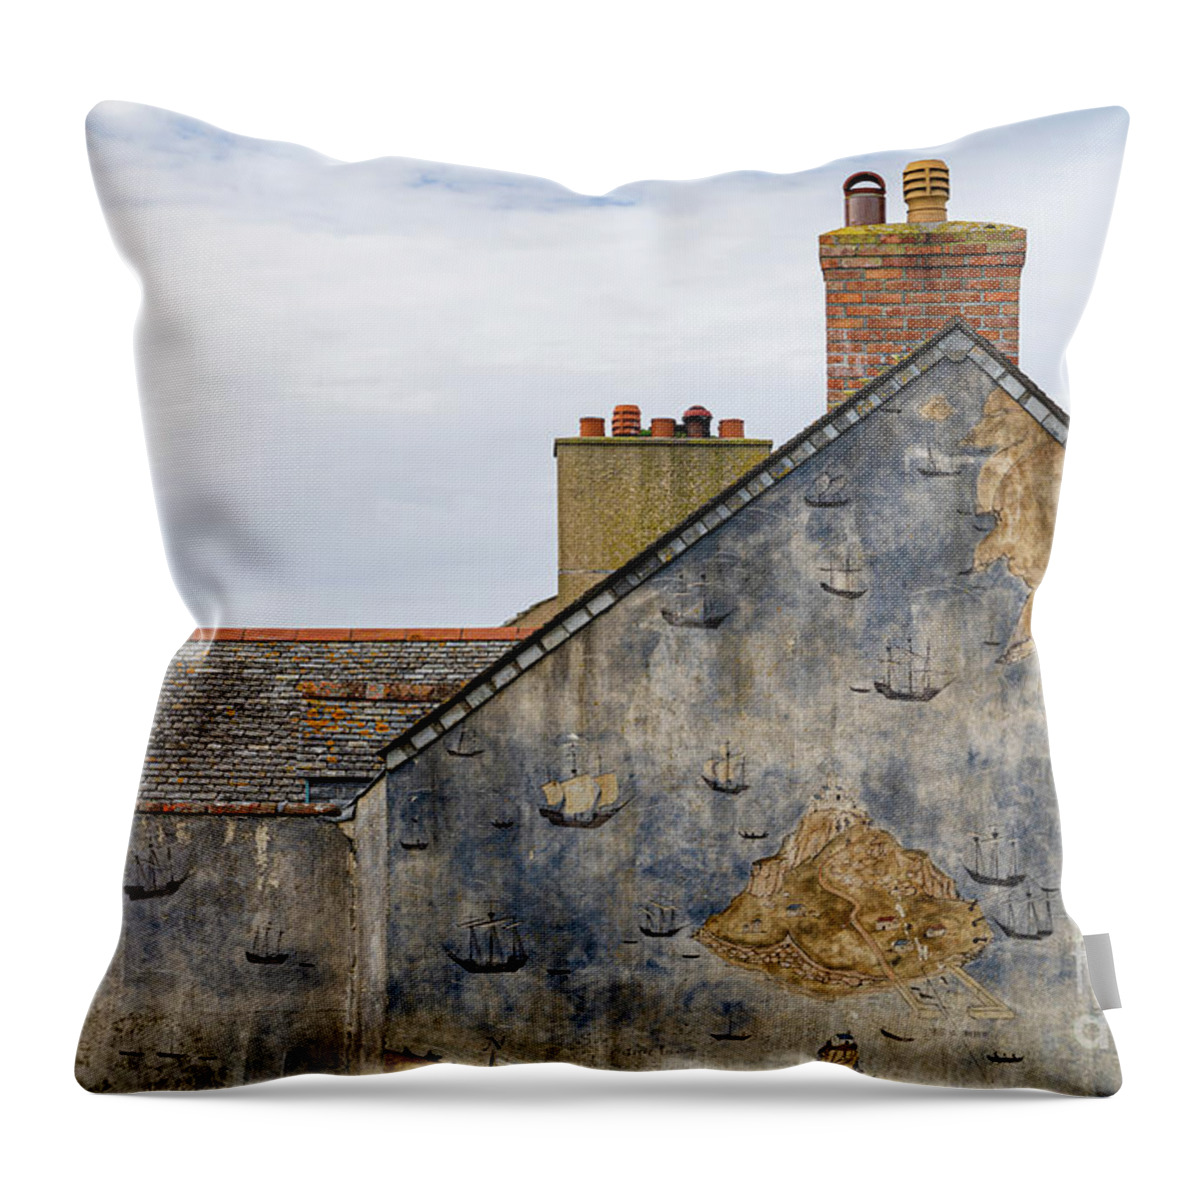 Wayne Moran Photograpy Throw Pillow featuring the photograph The Mural St Michael's Mount Cornwall England by Wayne Moran